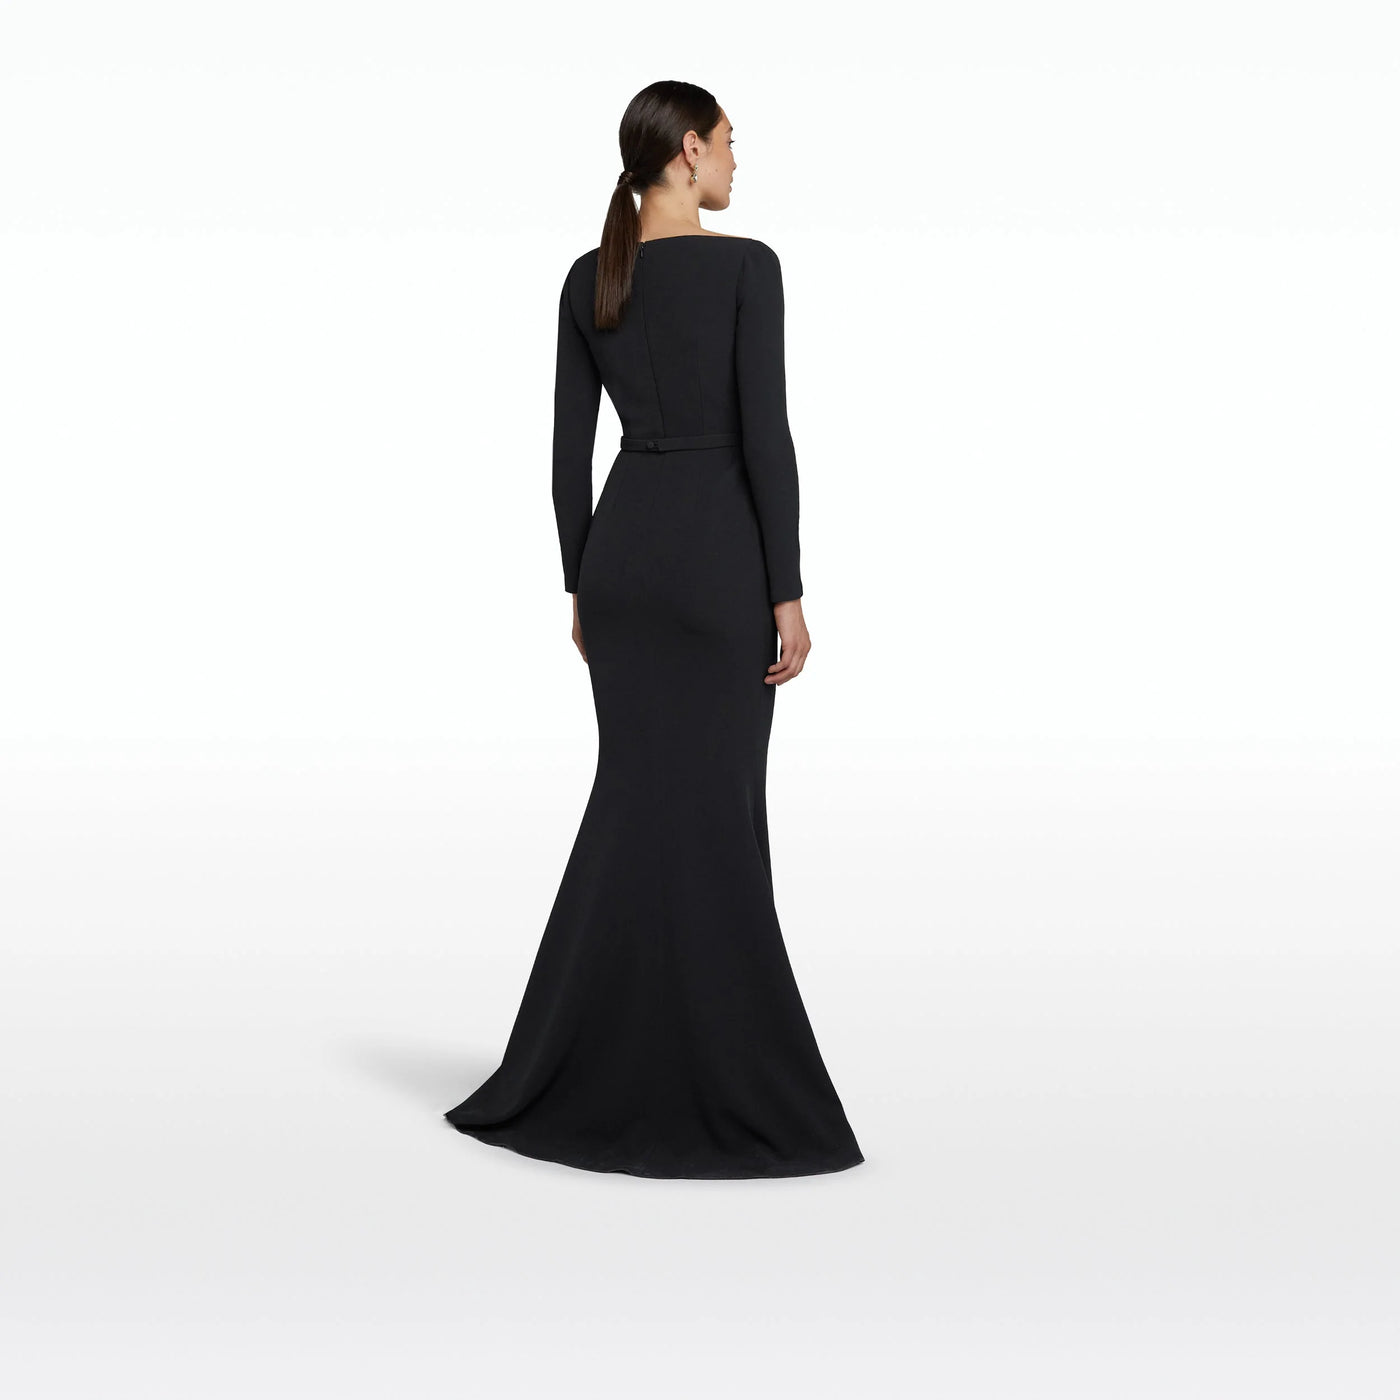 Heidi Embroidered Long Dress - Black